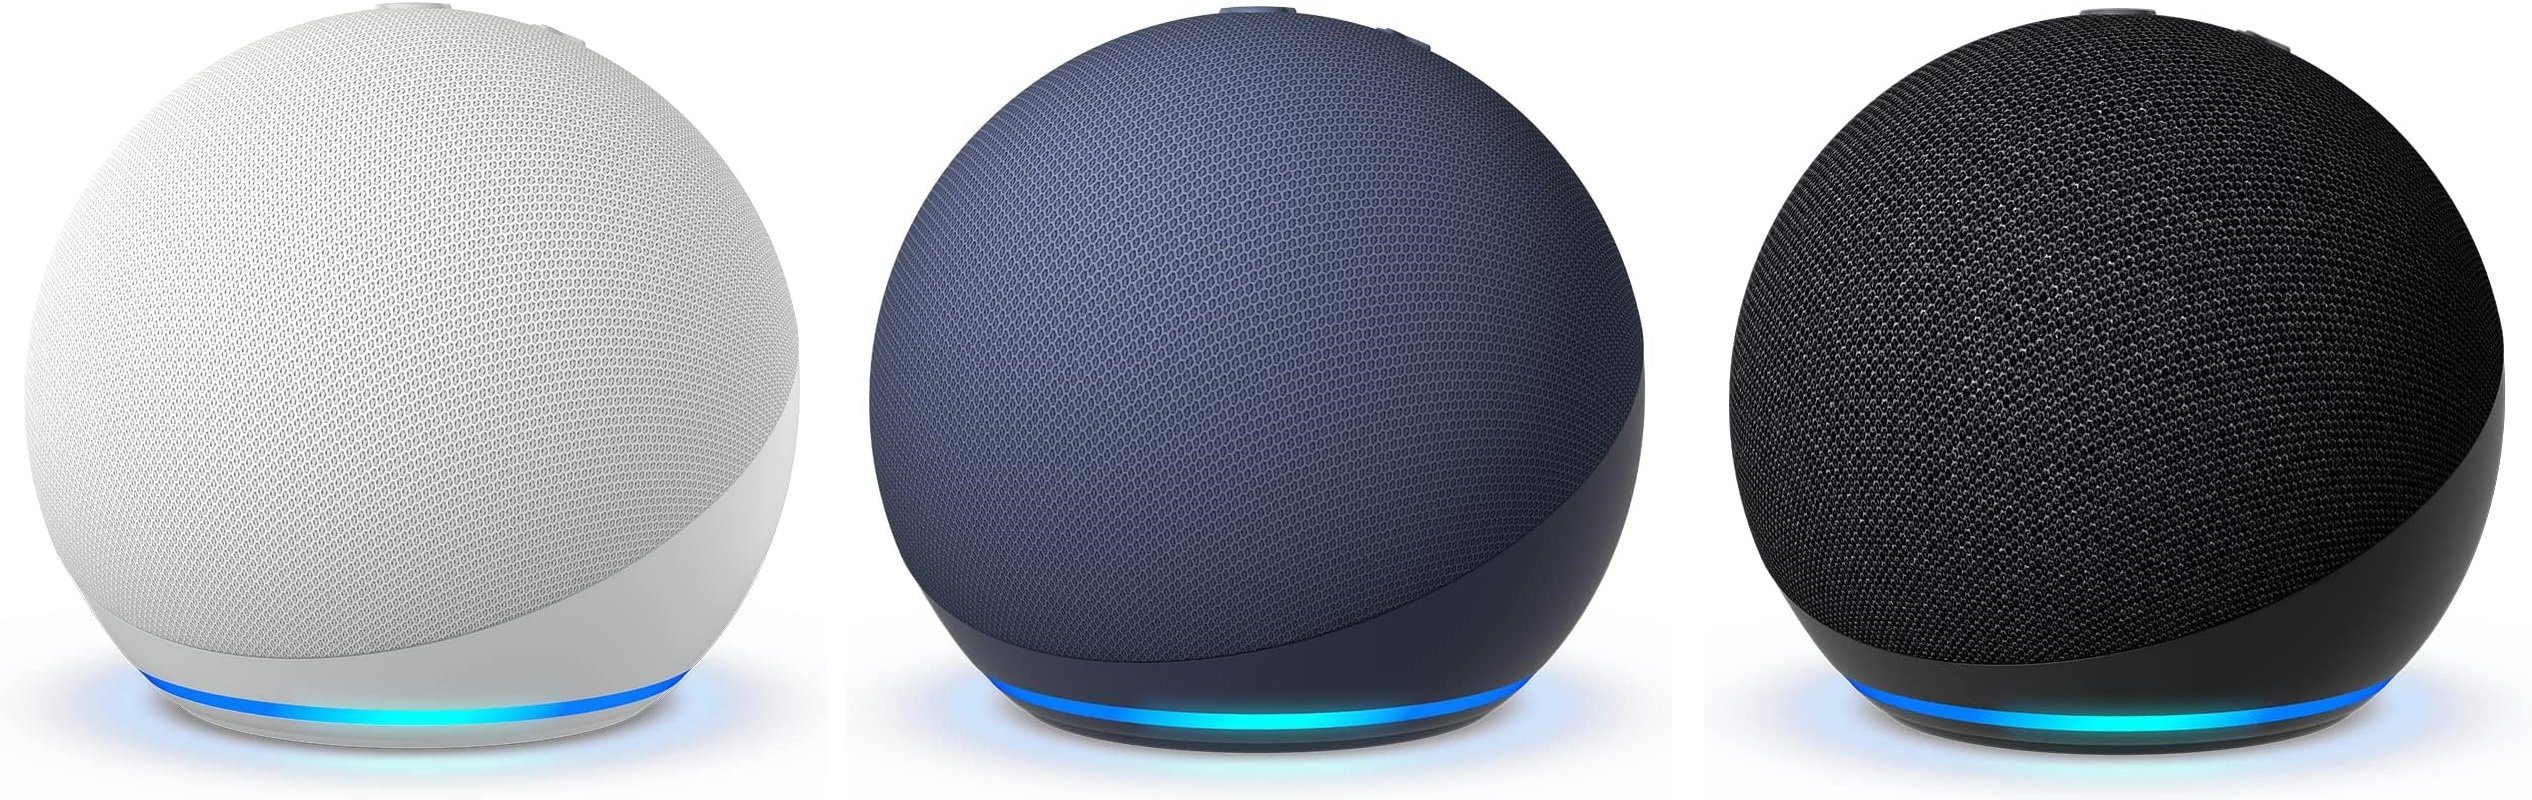 Amazon Echo Dot (5. Generation) Sprachgesteuerter Lautsprecher (WLAN (WiFi), Bluetooth, Alexa Smart Sprachsteuerung) Anthrazit